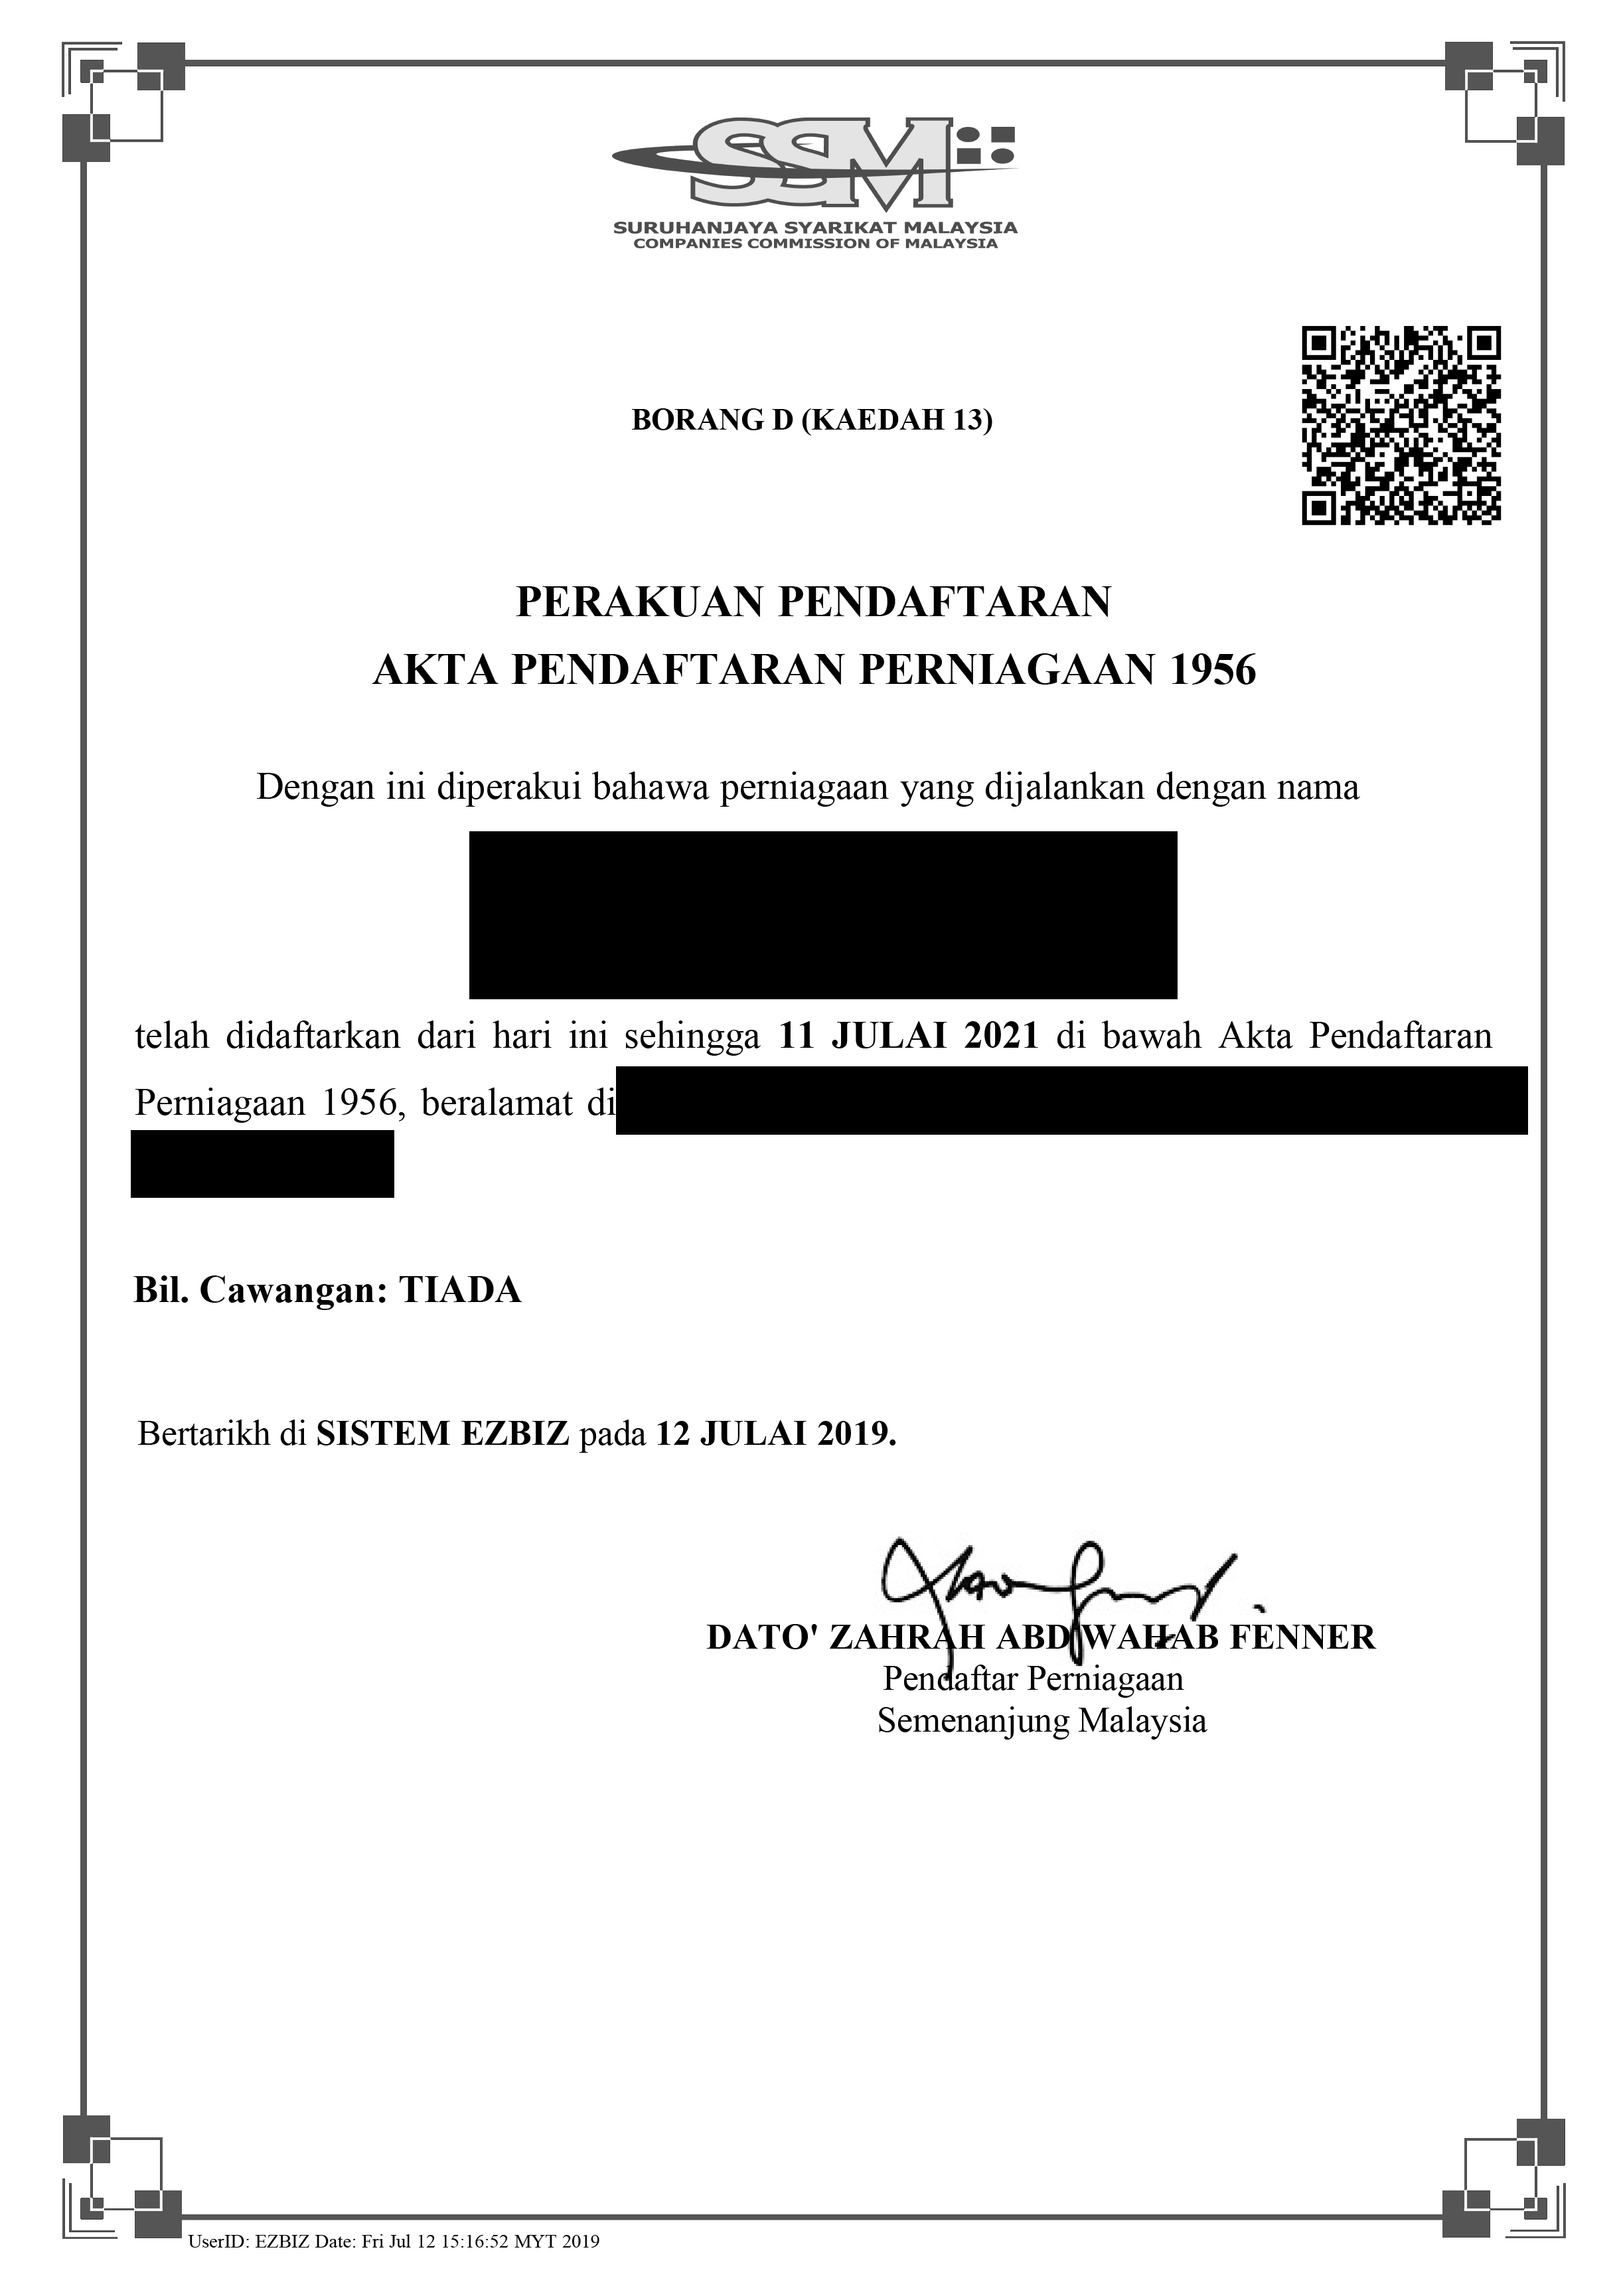 SSM Certificate